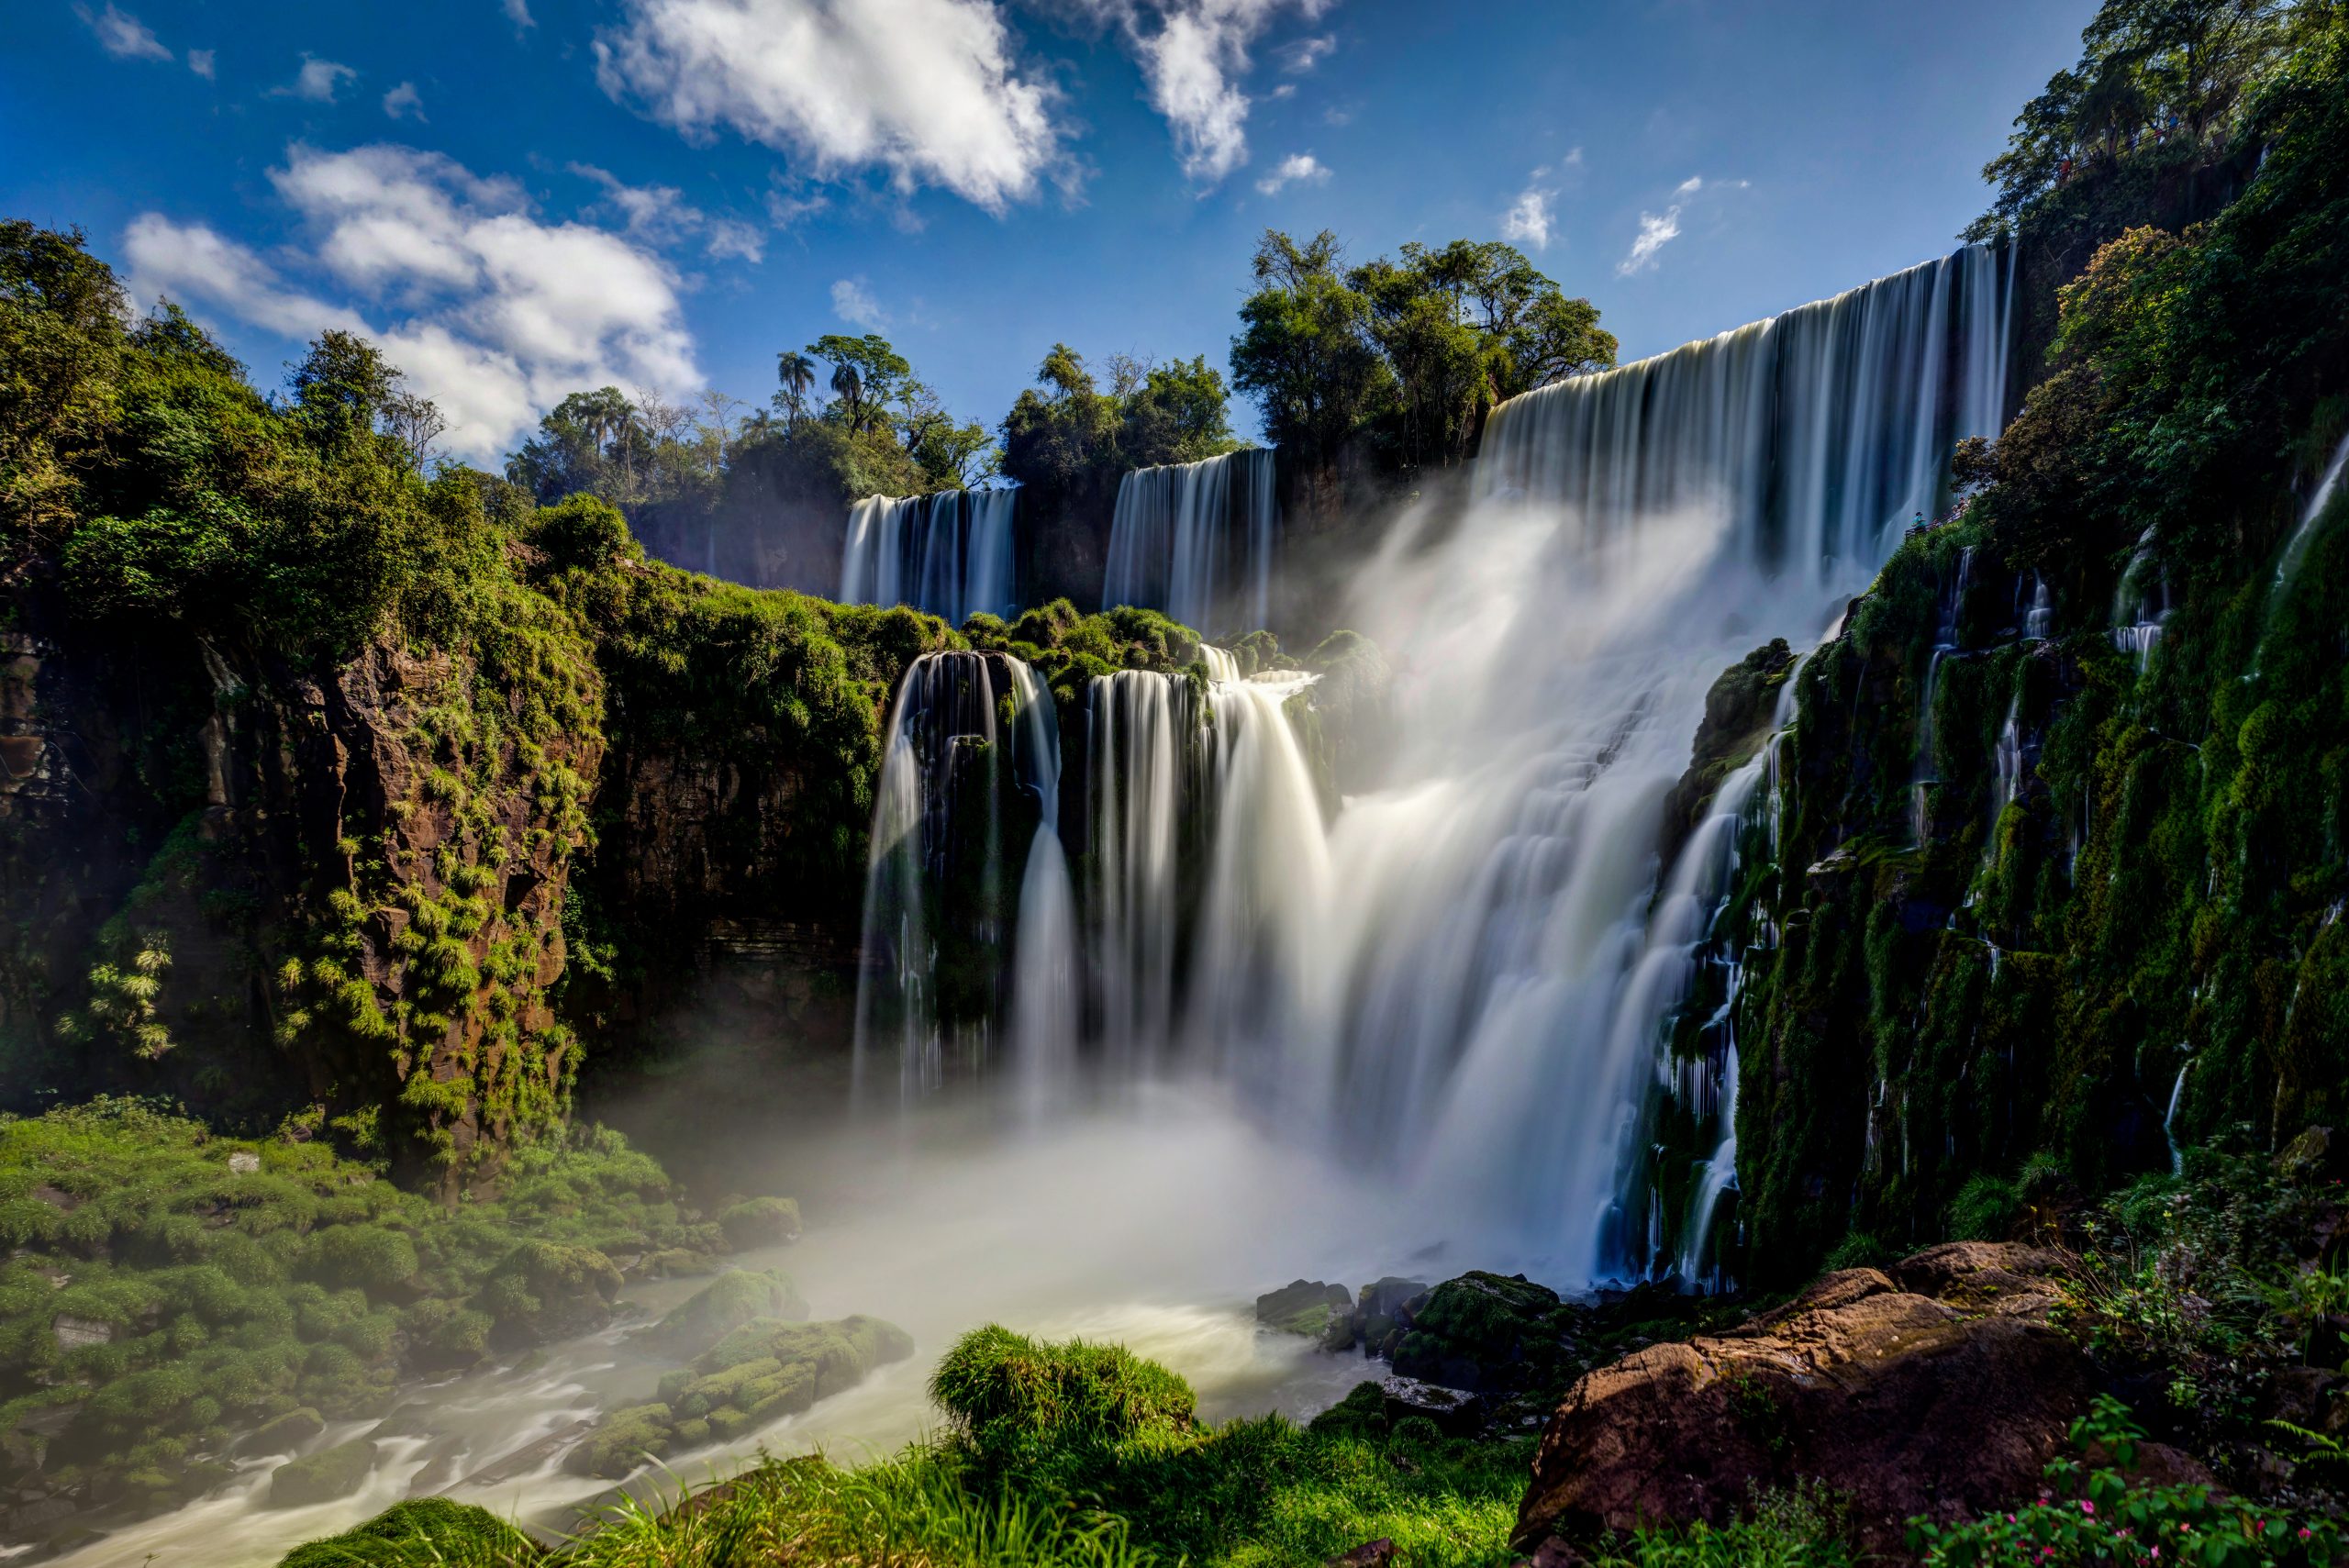 Photo taken in Foz de Iguazu, Argentina, August 2017: Iguazu Waterfalls Jungle Argentina Brazil